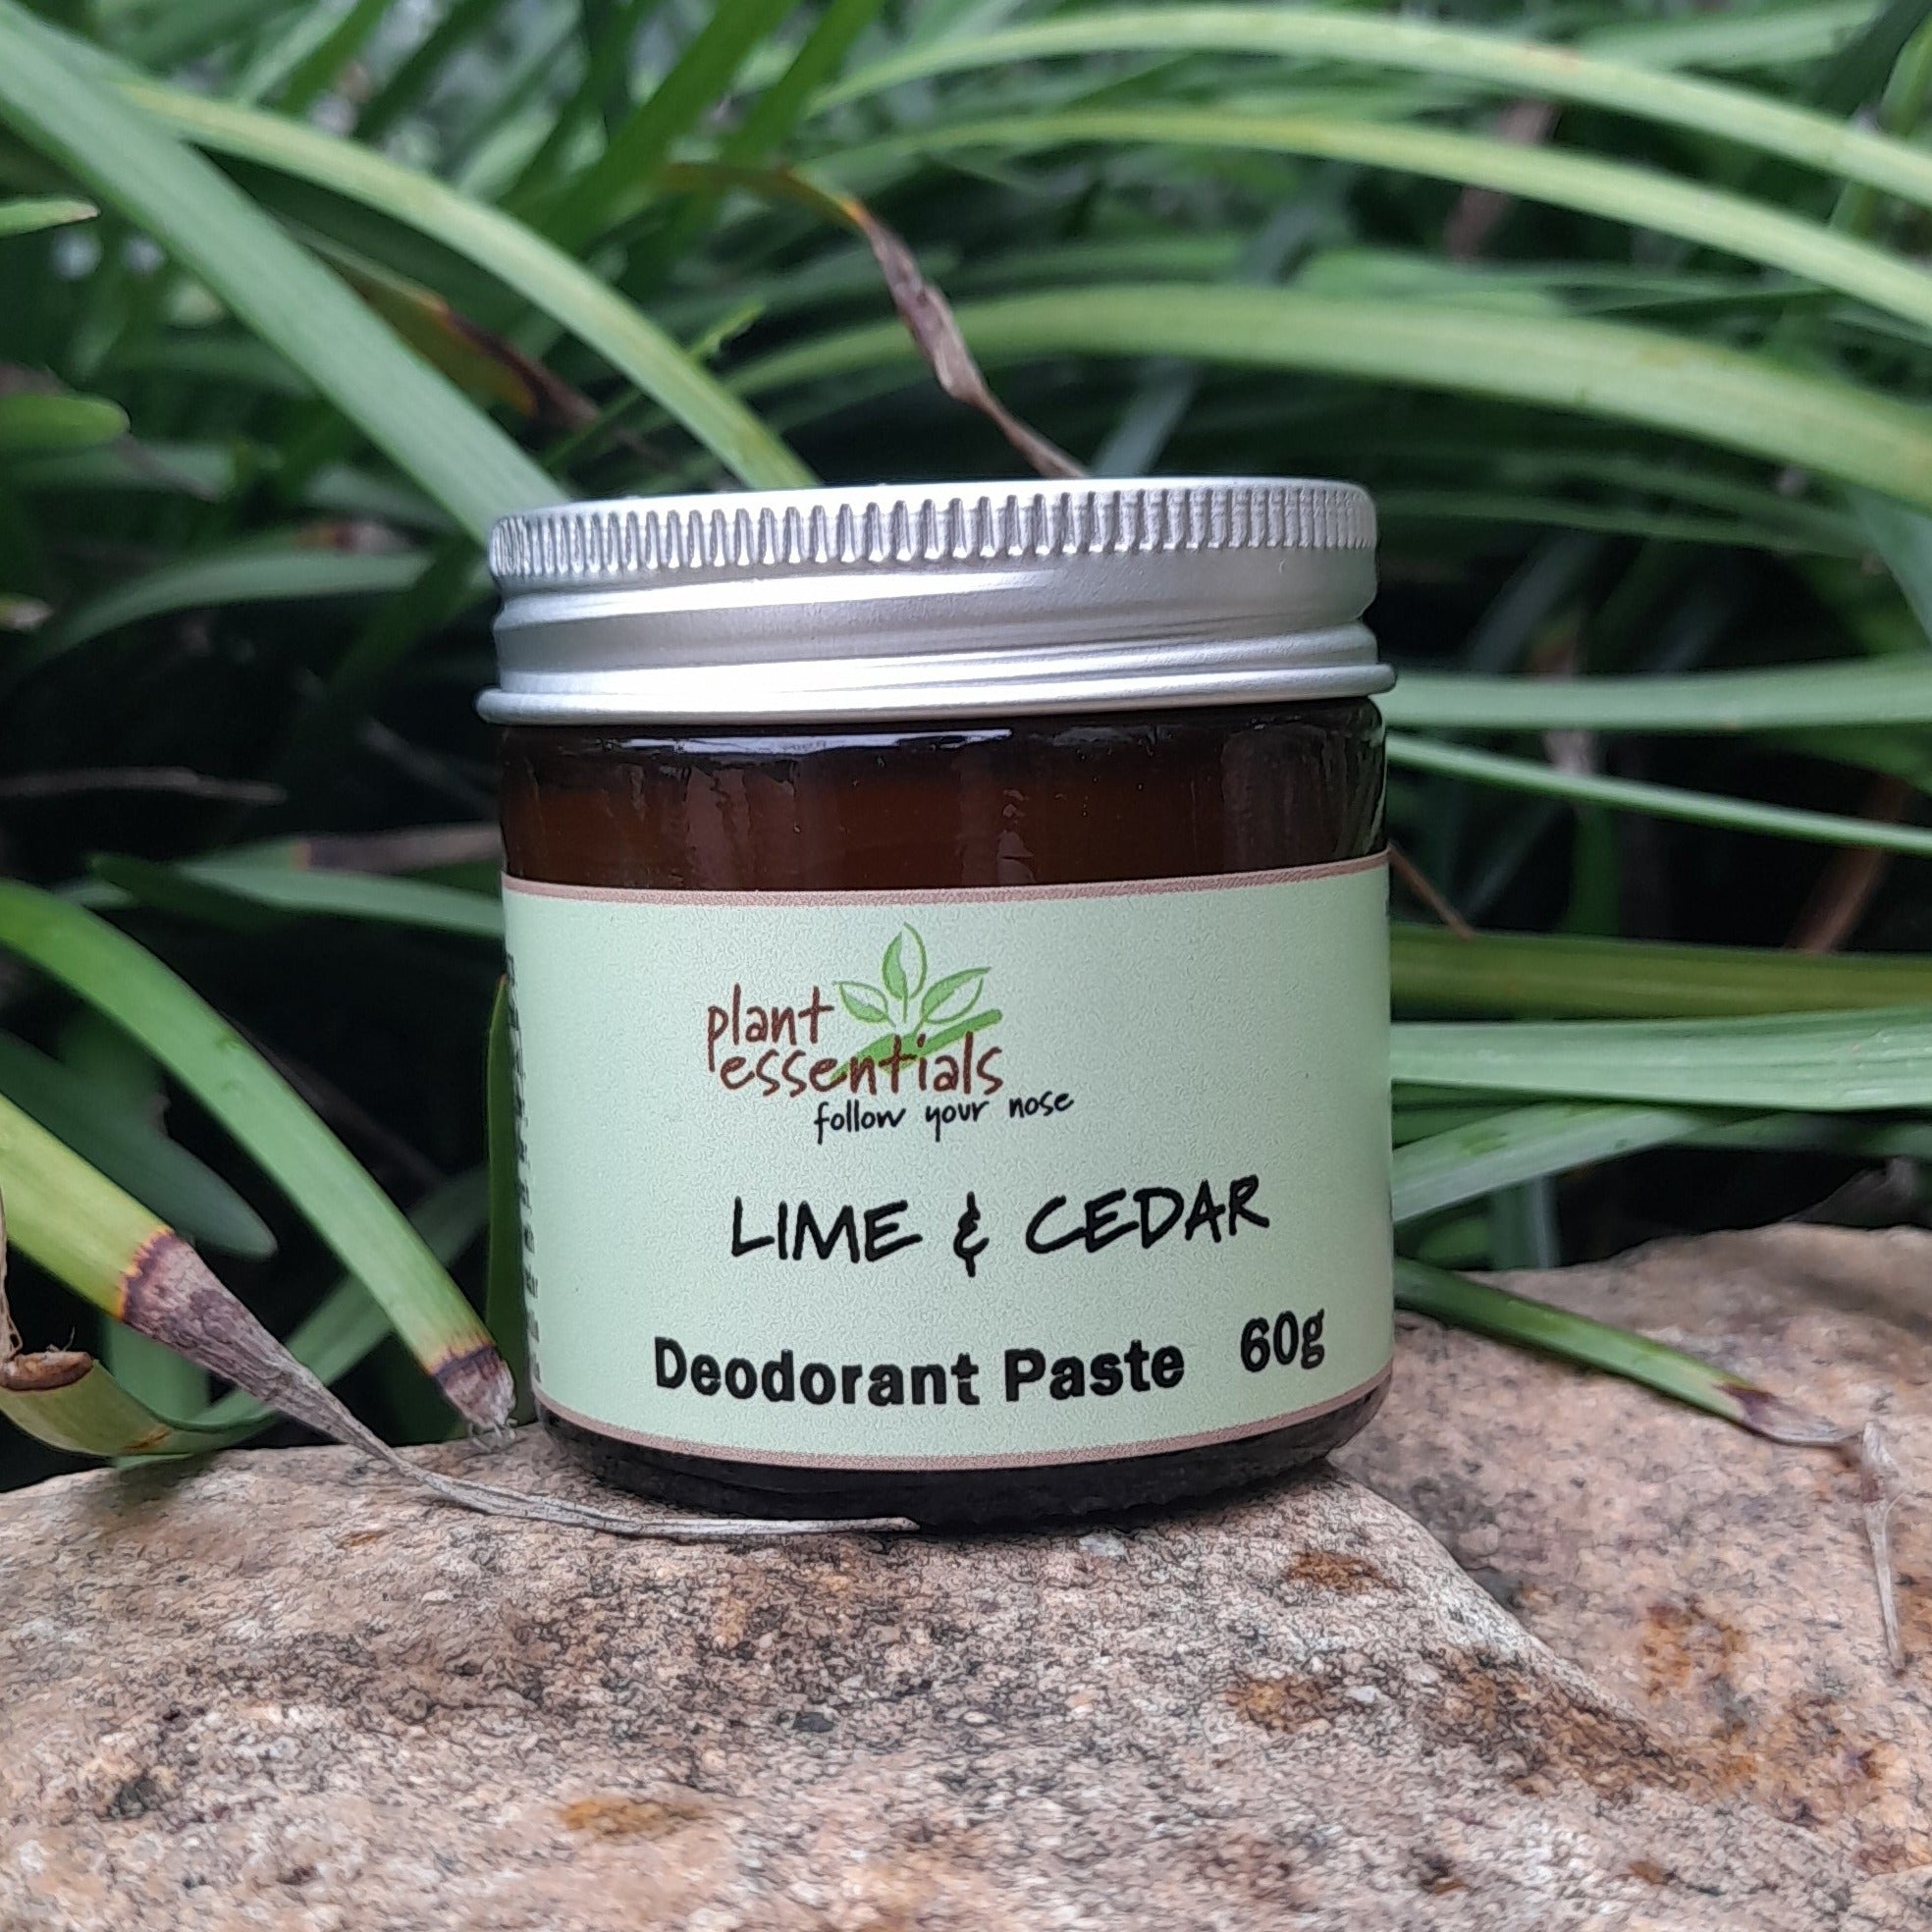 Lime & Cedar Deodorant Paste 60g